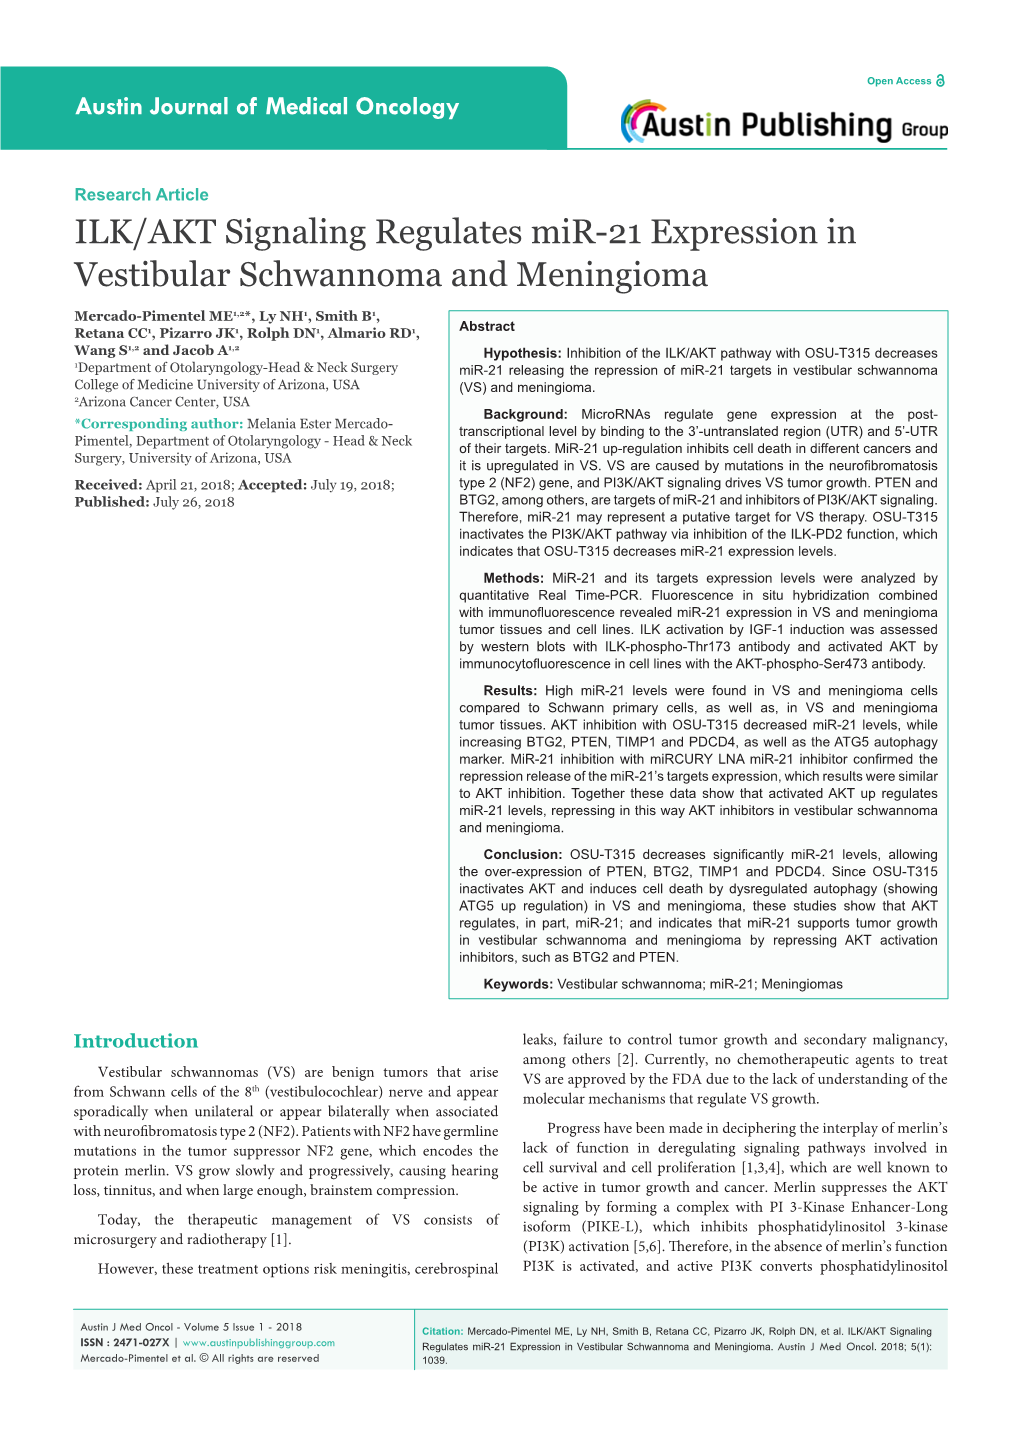 ILK/AKT Signaling Regulates Mir-21 Expression in Vestibular Schwannoma and Meningioma